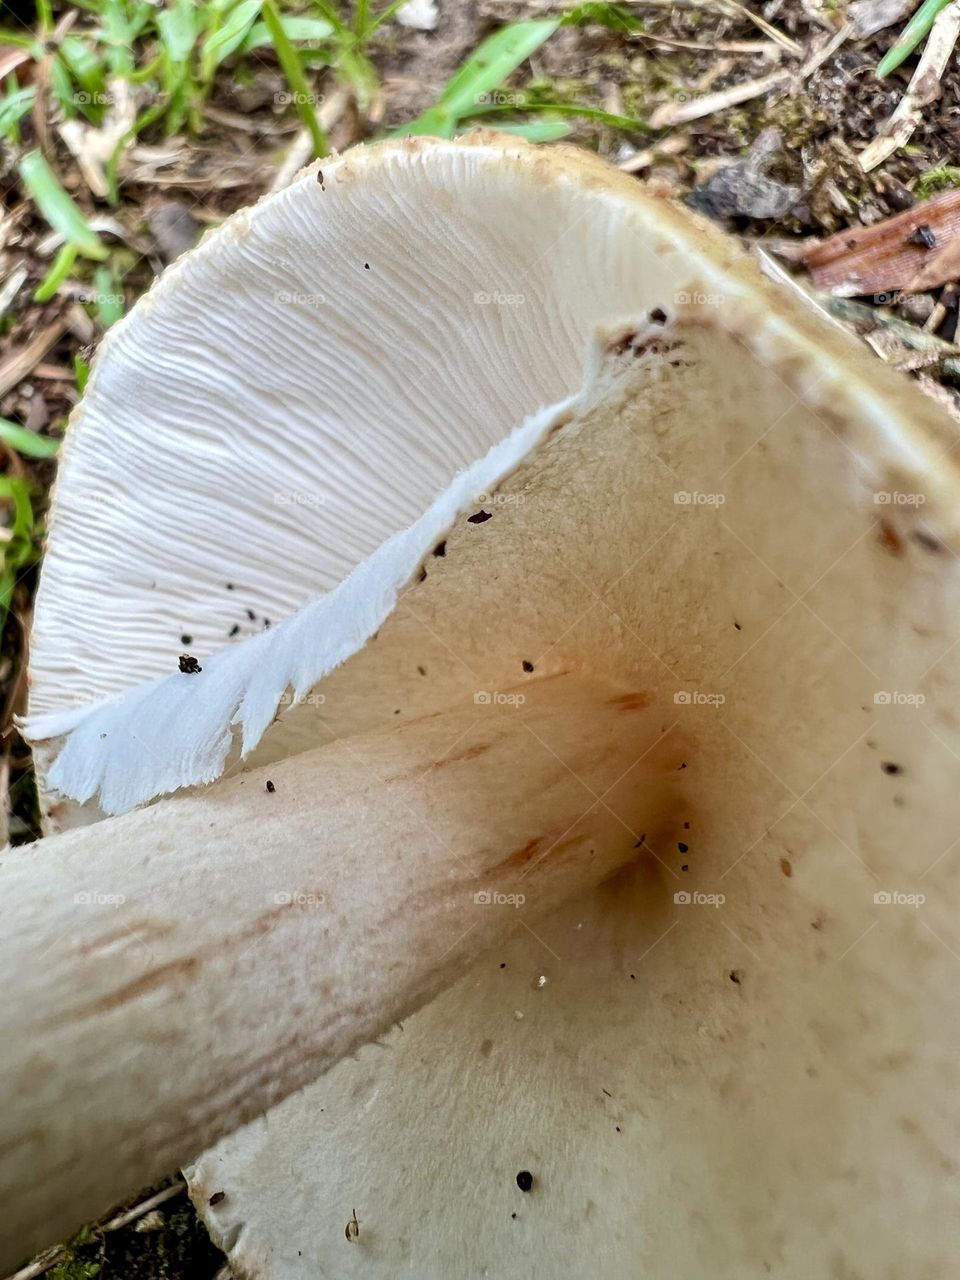 Closeup details of cap, gills and veil on Amanita mushrooms